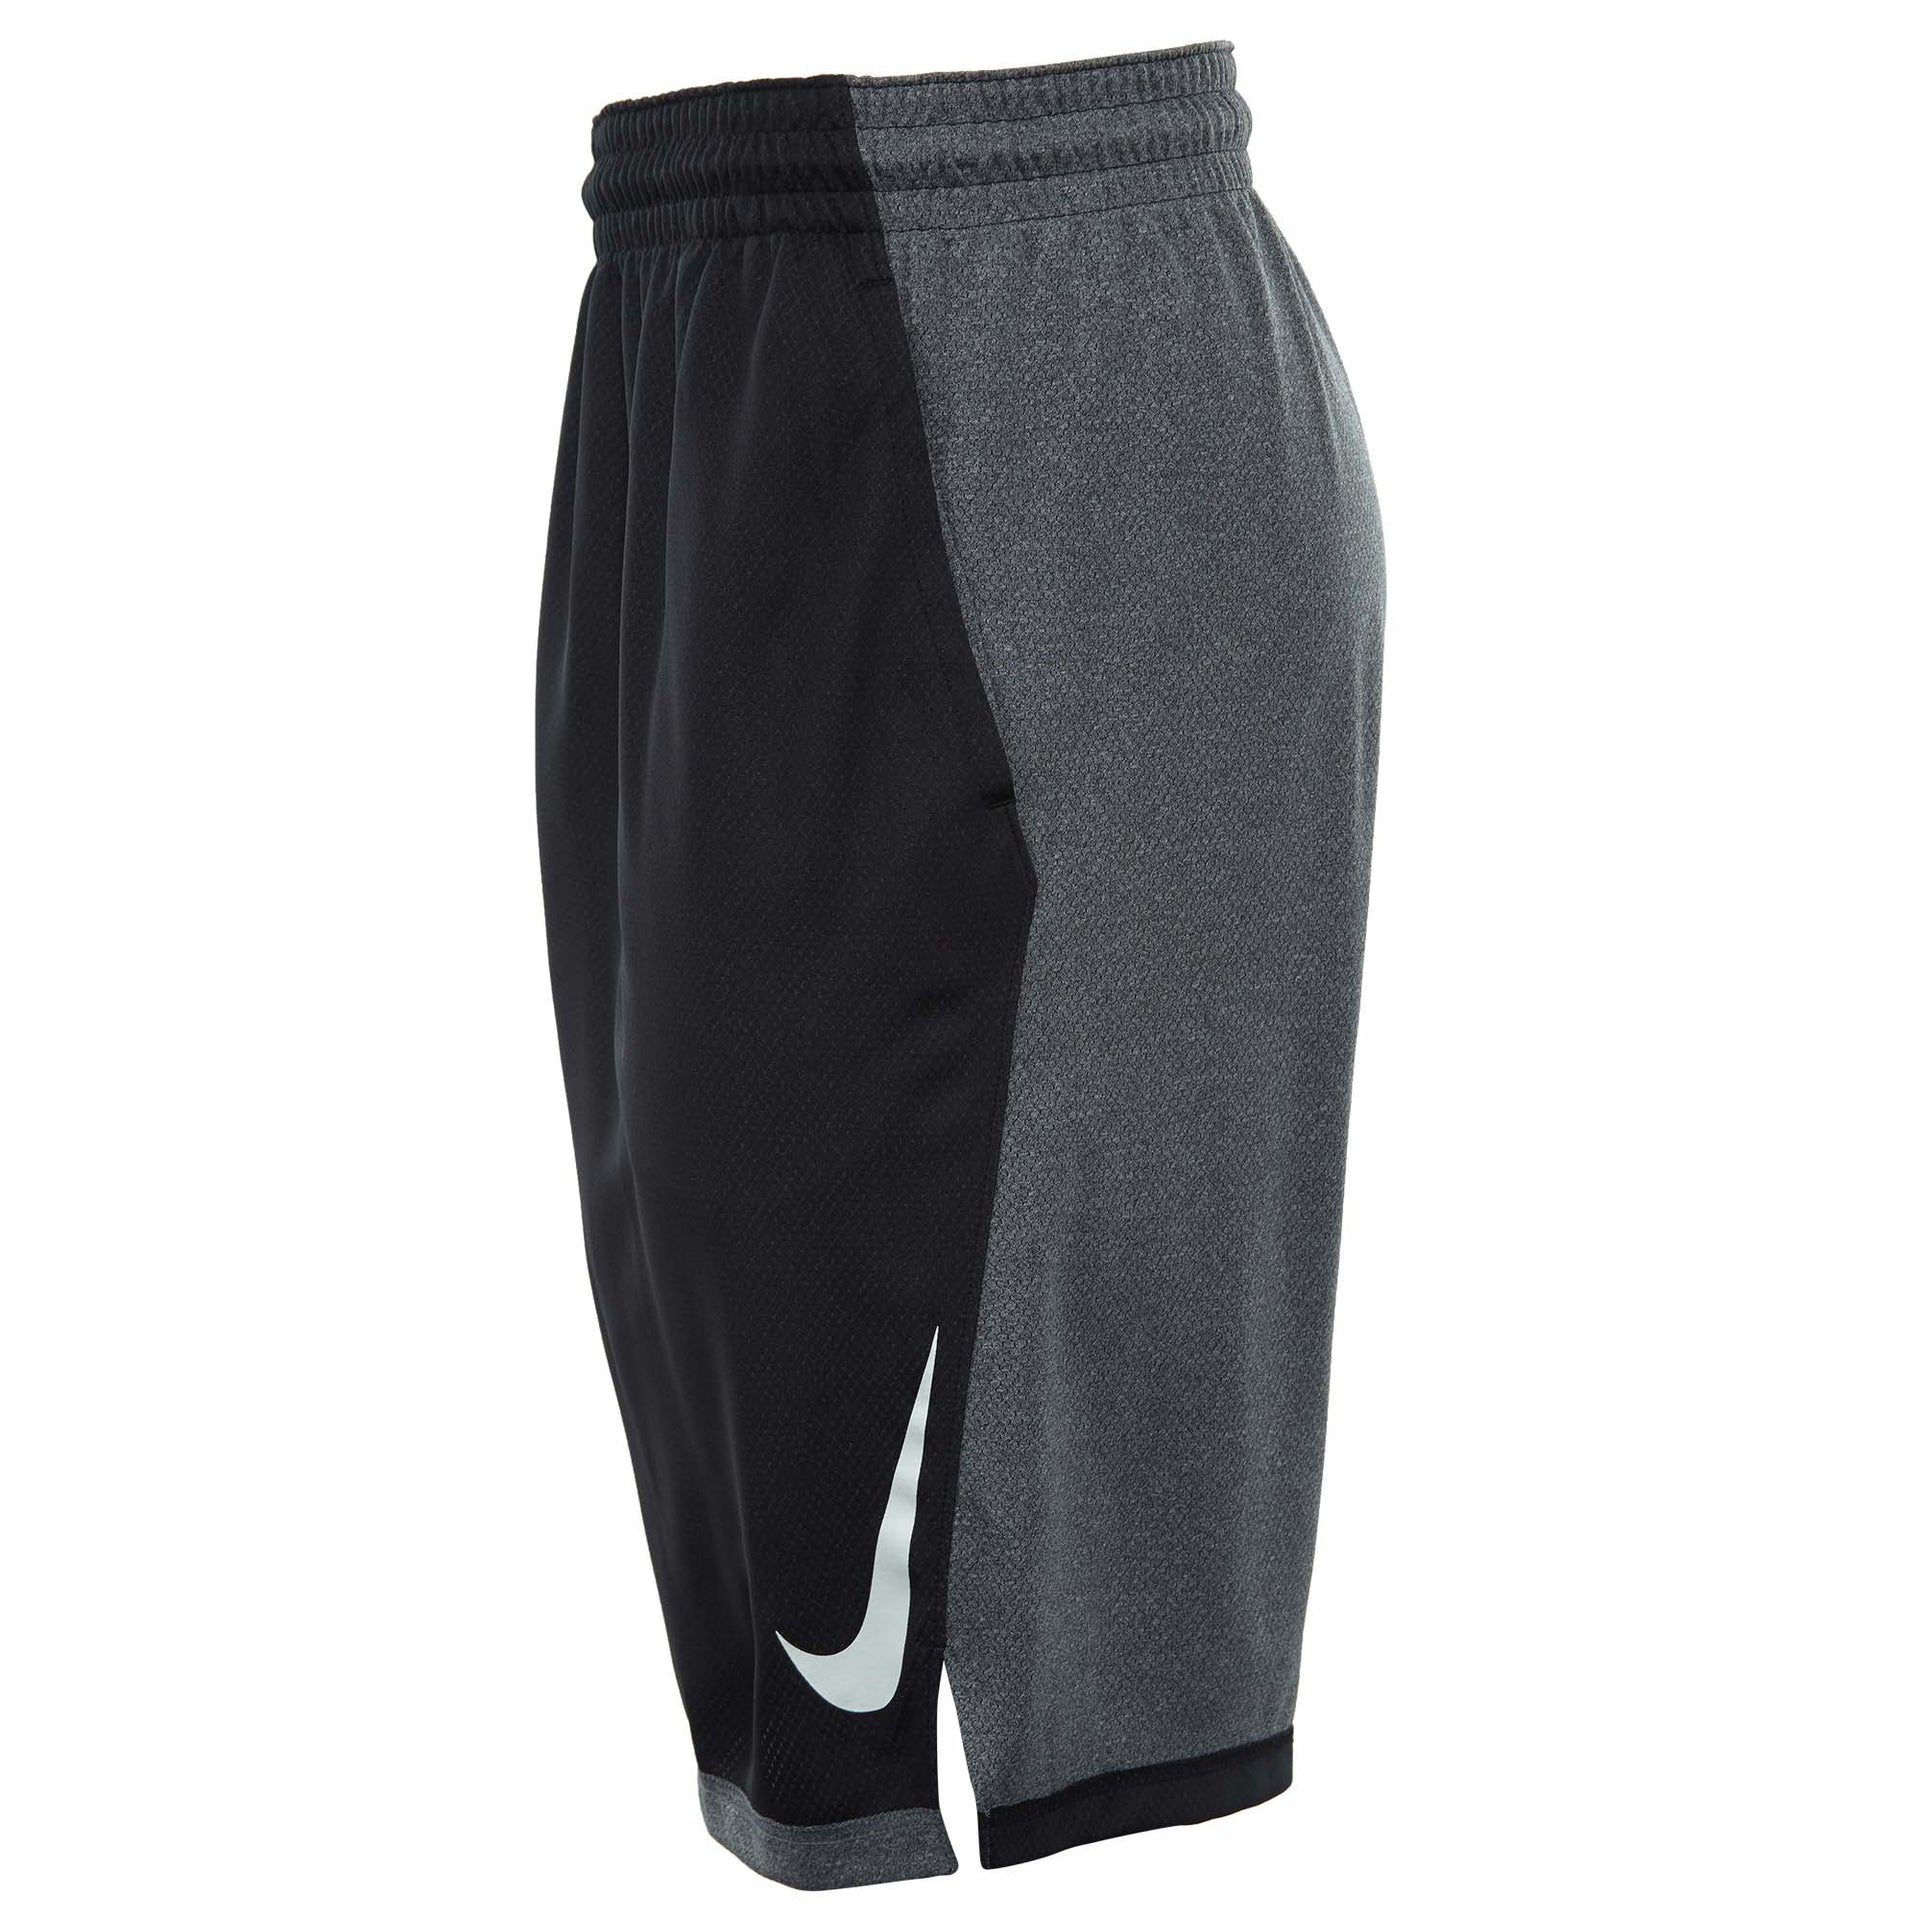 Nike Dribble Drive Shorts Mens Style : 891812